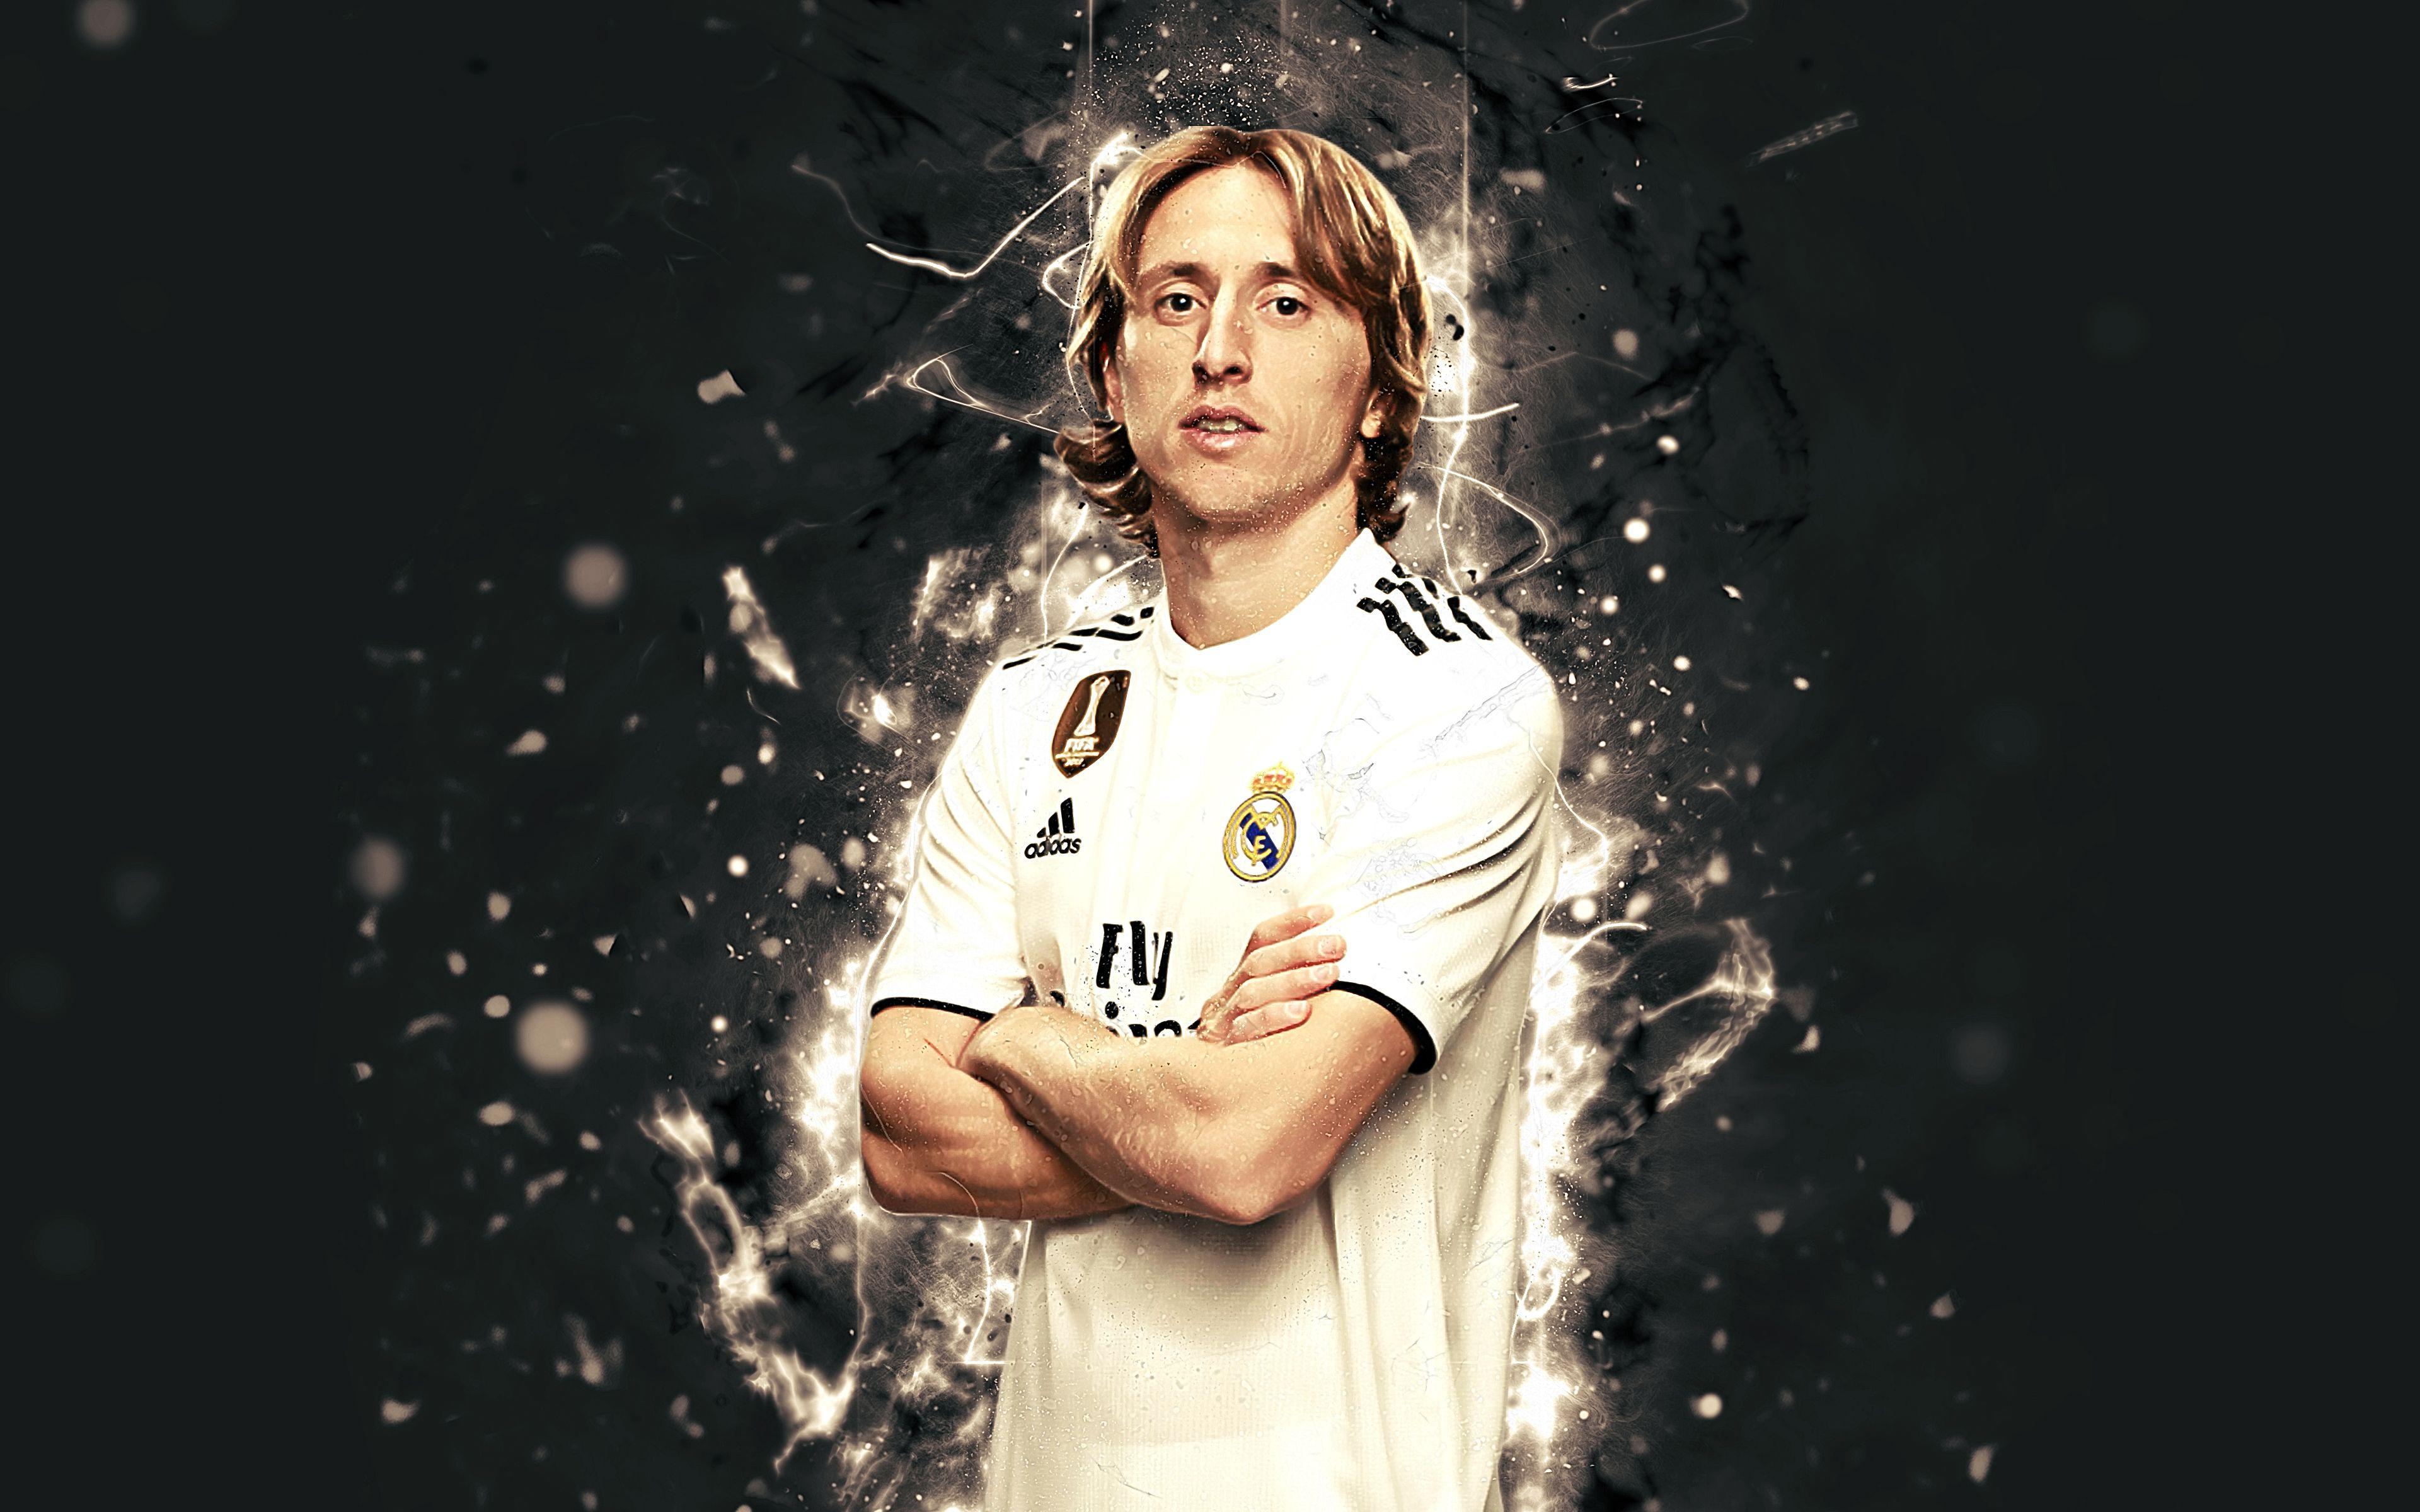 Wallpaper wallpaper, sport, football, player, Luka Modric, Real Madrid CF  images for desktop, section спорт - download